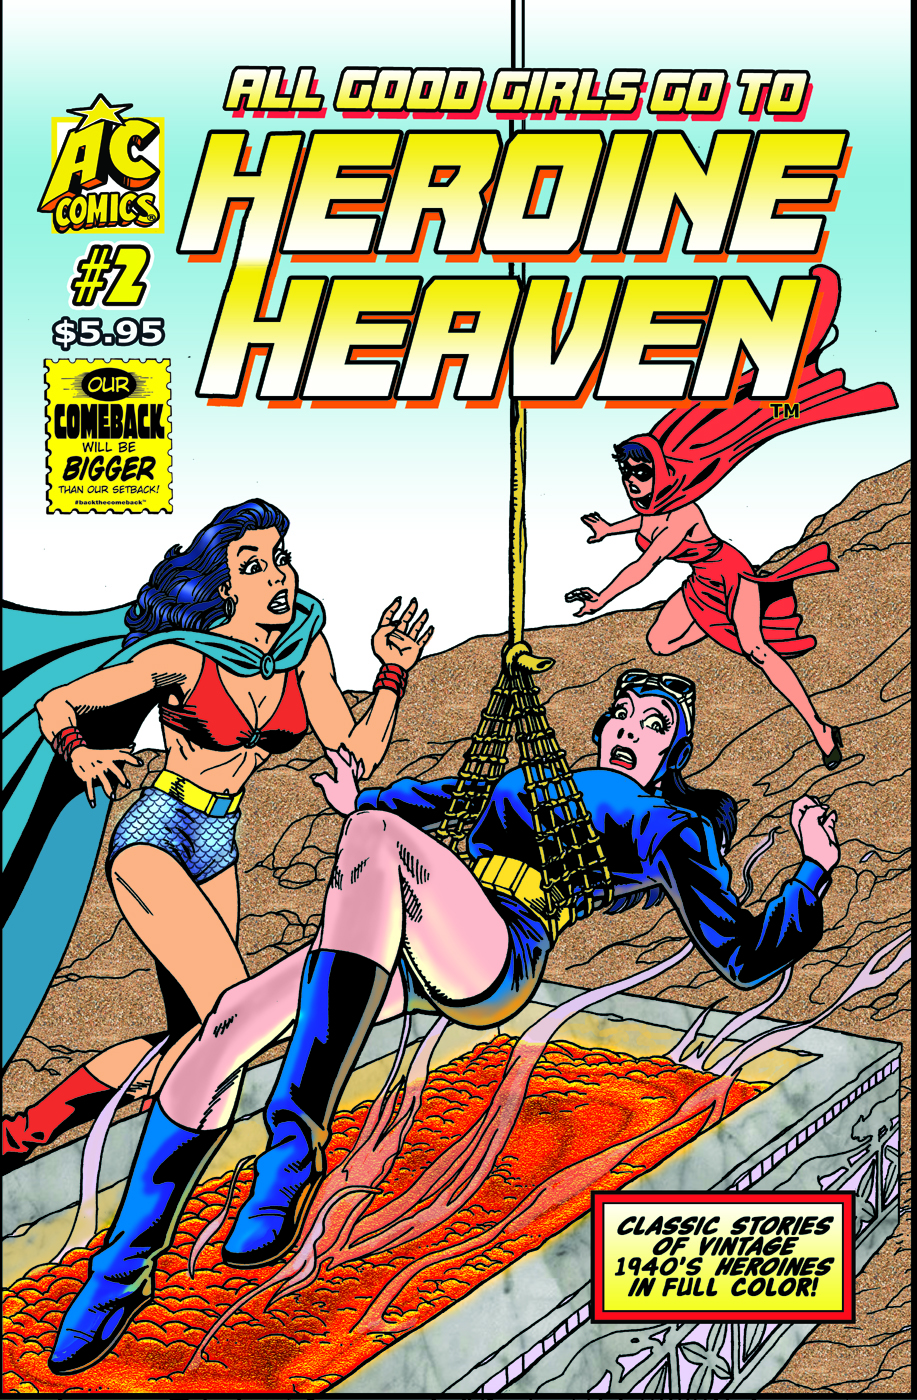 004--AC COMICS  February 2023 PREVIEWS FOR April 2023 SHIP--Heroine Heaven #2